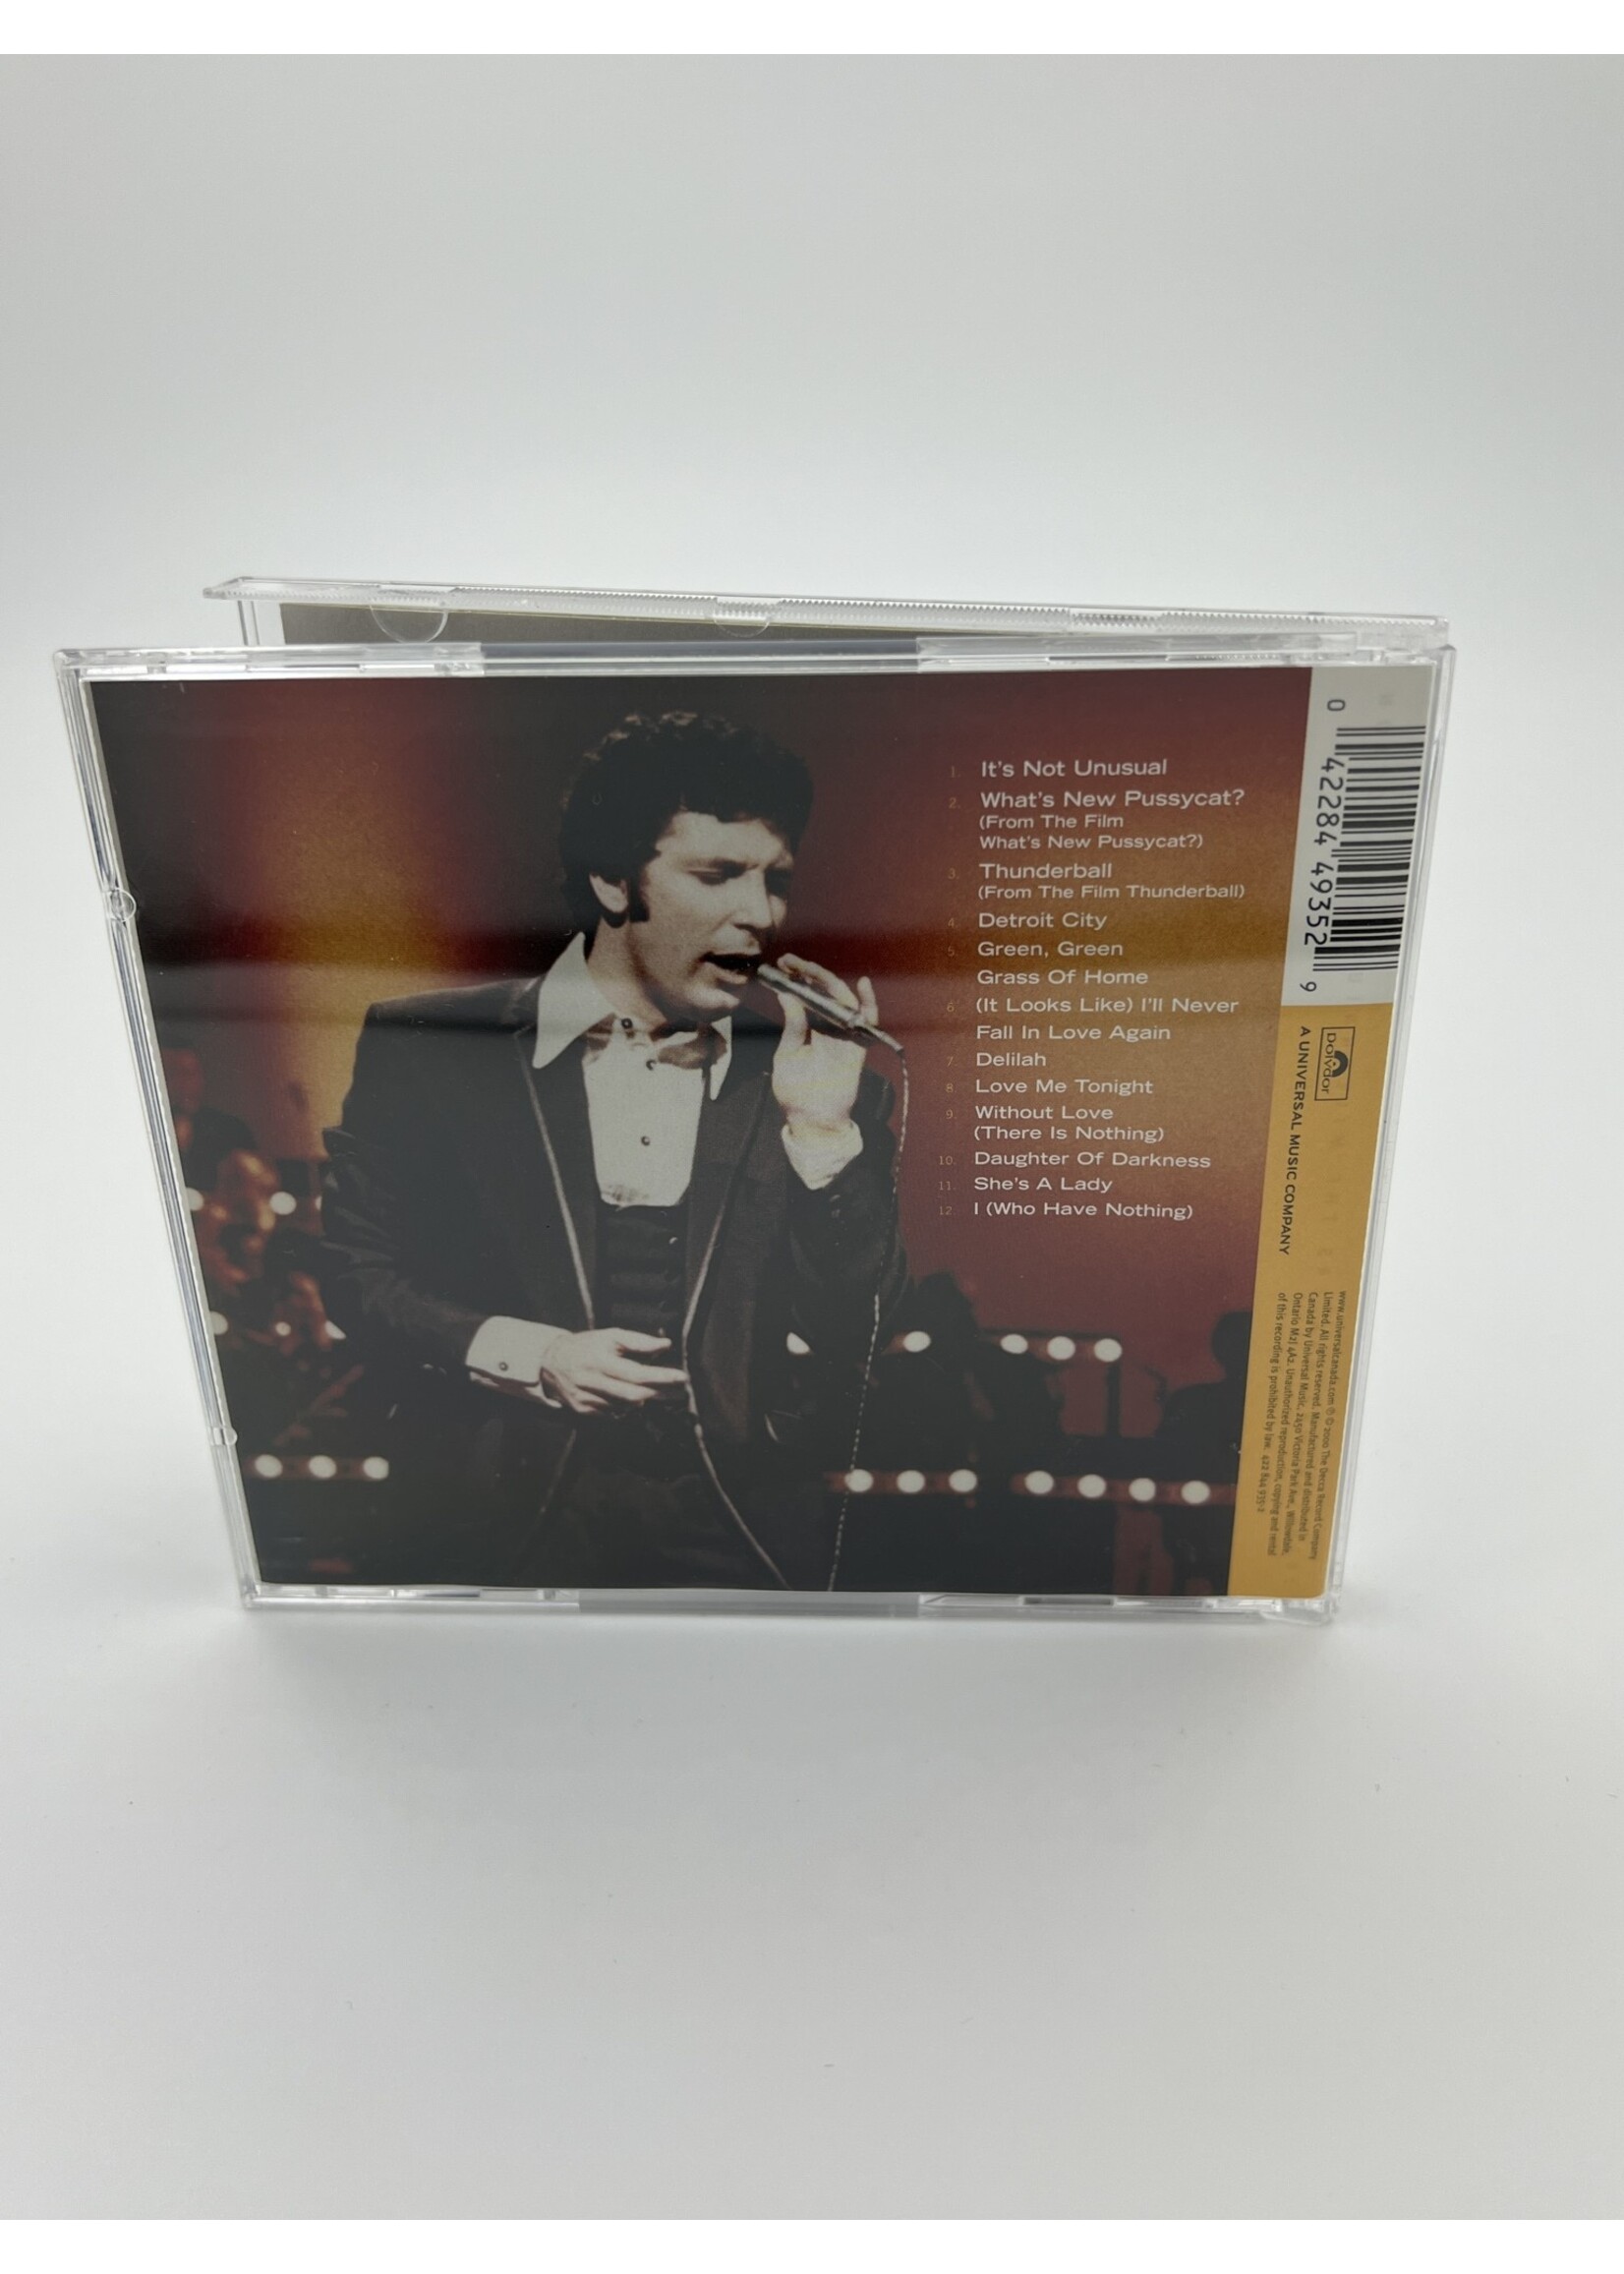 CD   The Best Of Tom Jones The Millennium Collection CD